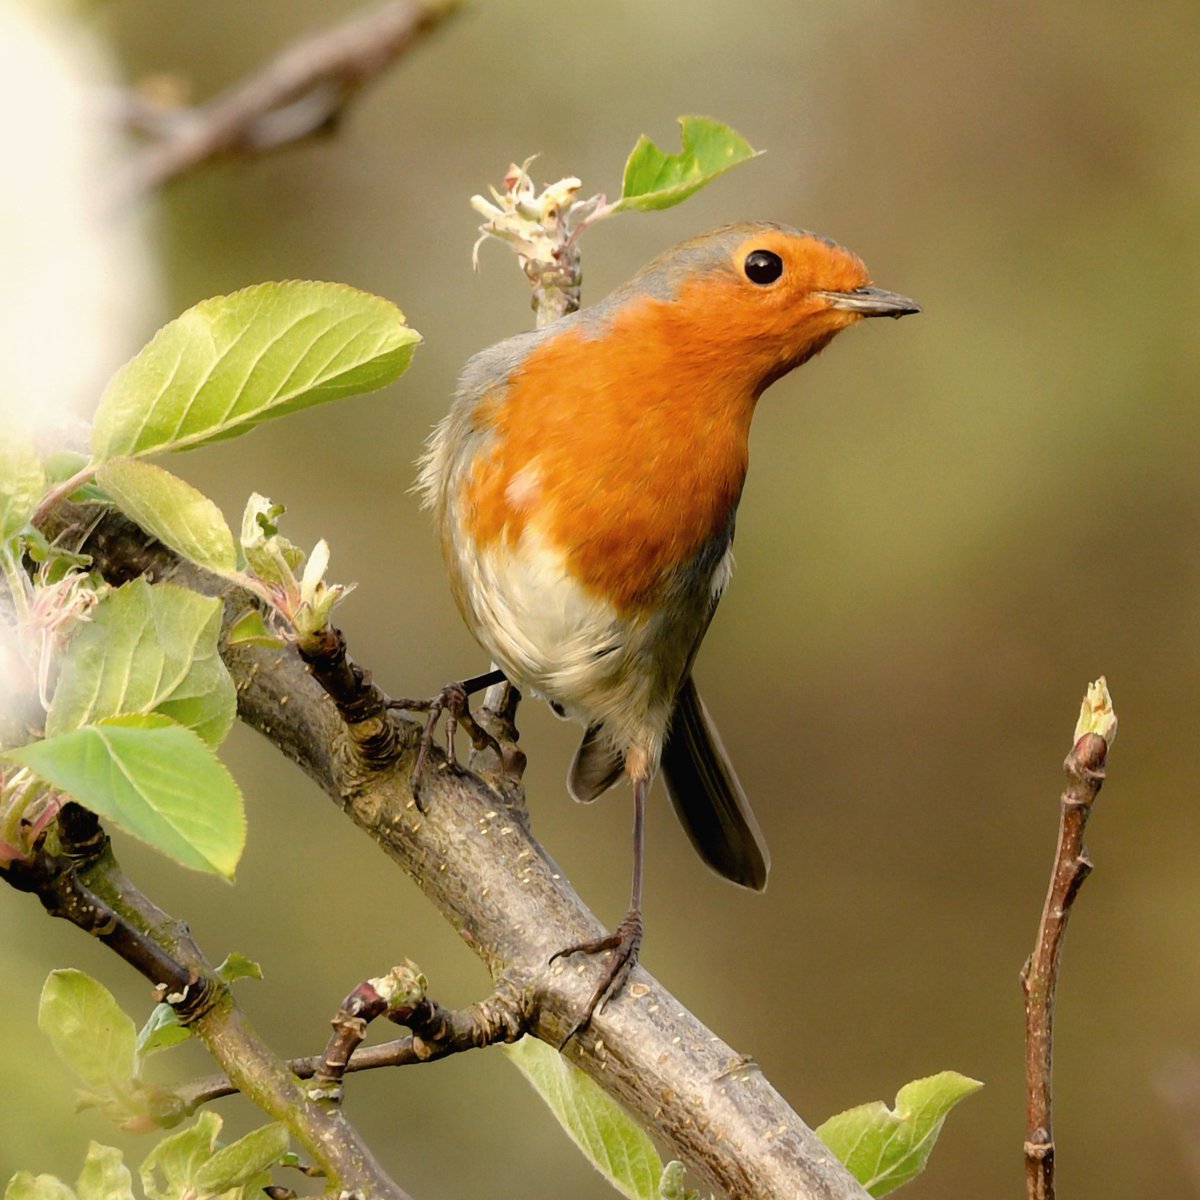 Resident #robin. 

#TwitterNatureCommunity #BirdsofTwitter #nature #birdtwitter #wildlife #birds #redbreast